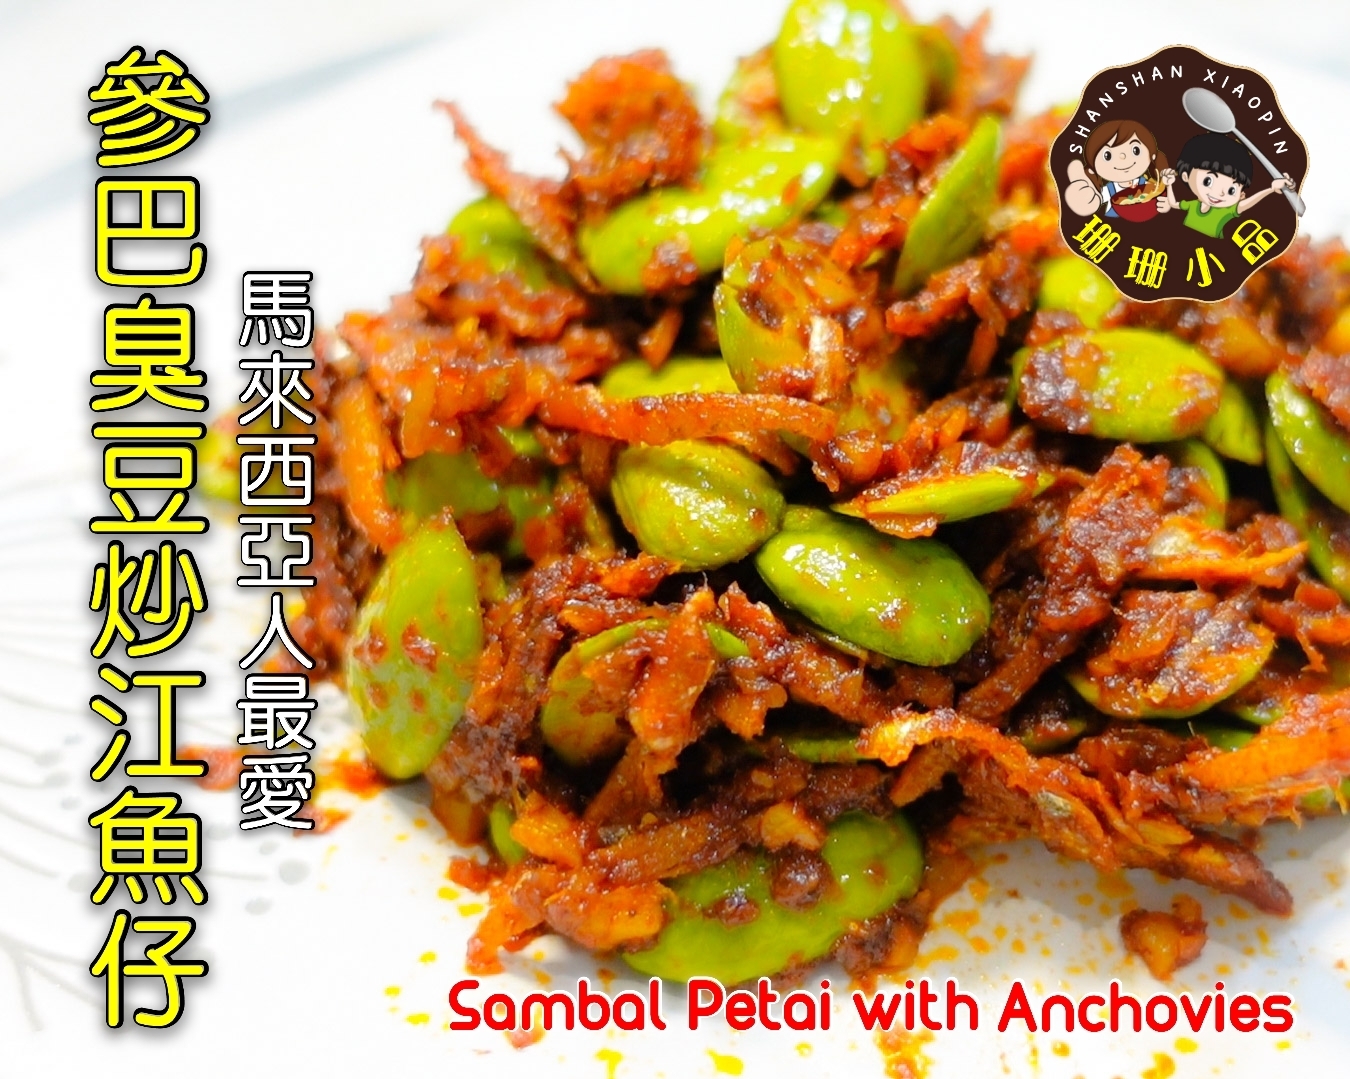 參巴臭豆炒江魚仔 - Sambal Petai with Anchovies